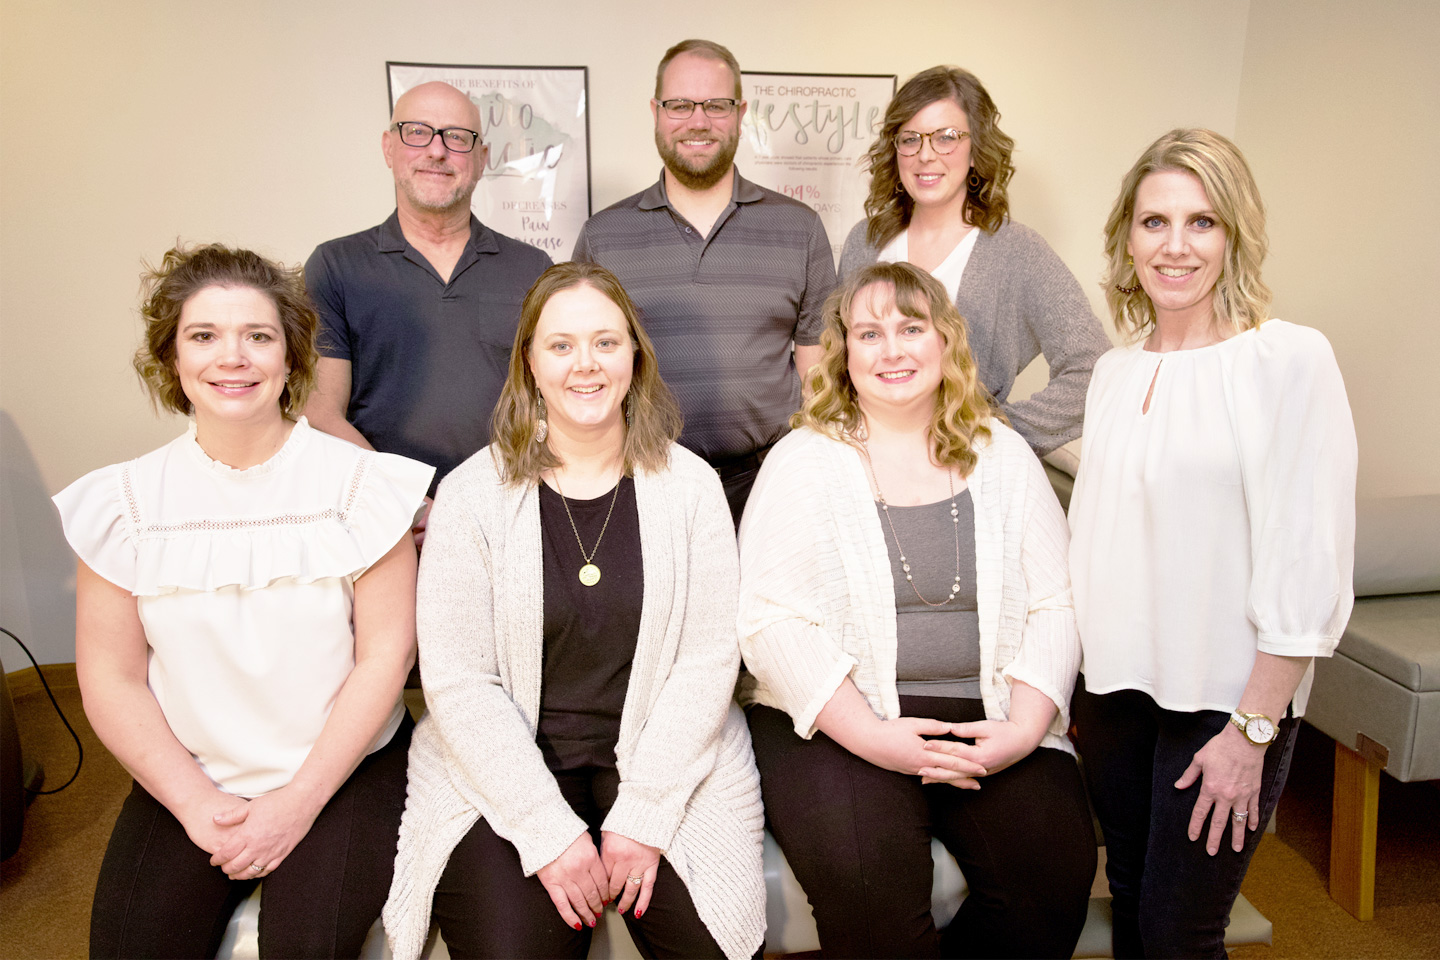 The Chiropractic Wellness Center team photo